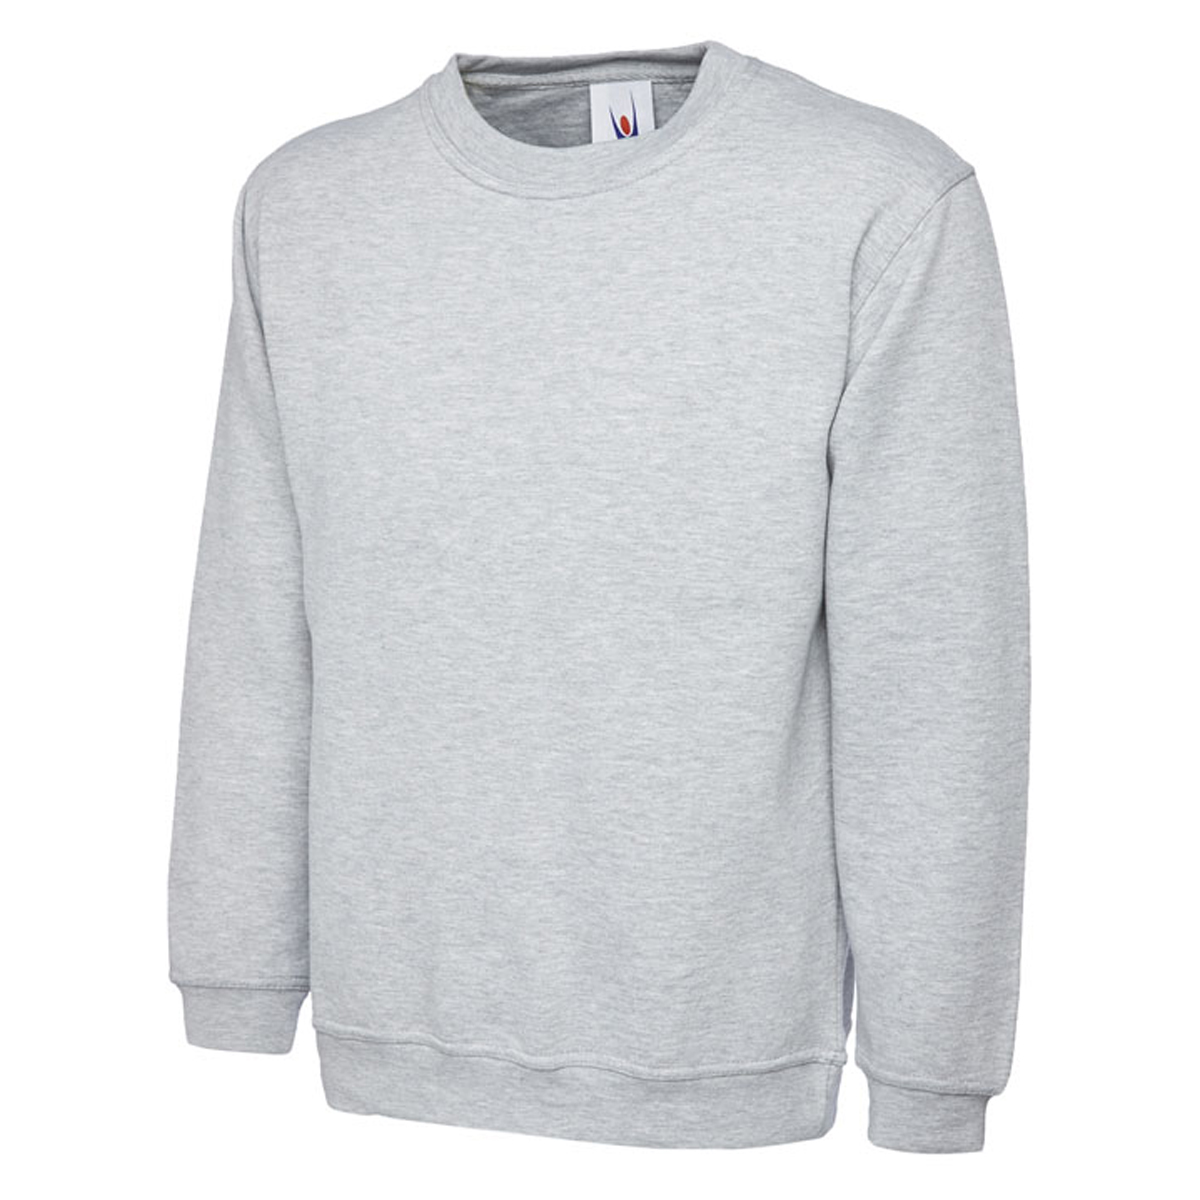 Uc203 300gsm classic sweatshirt - heather grey - medium